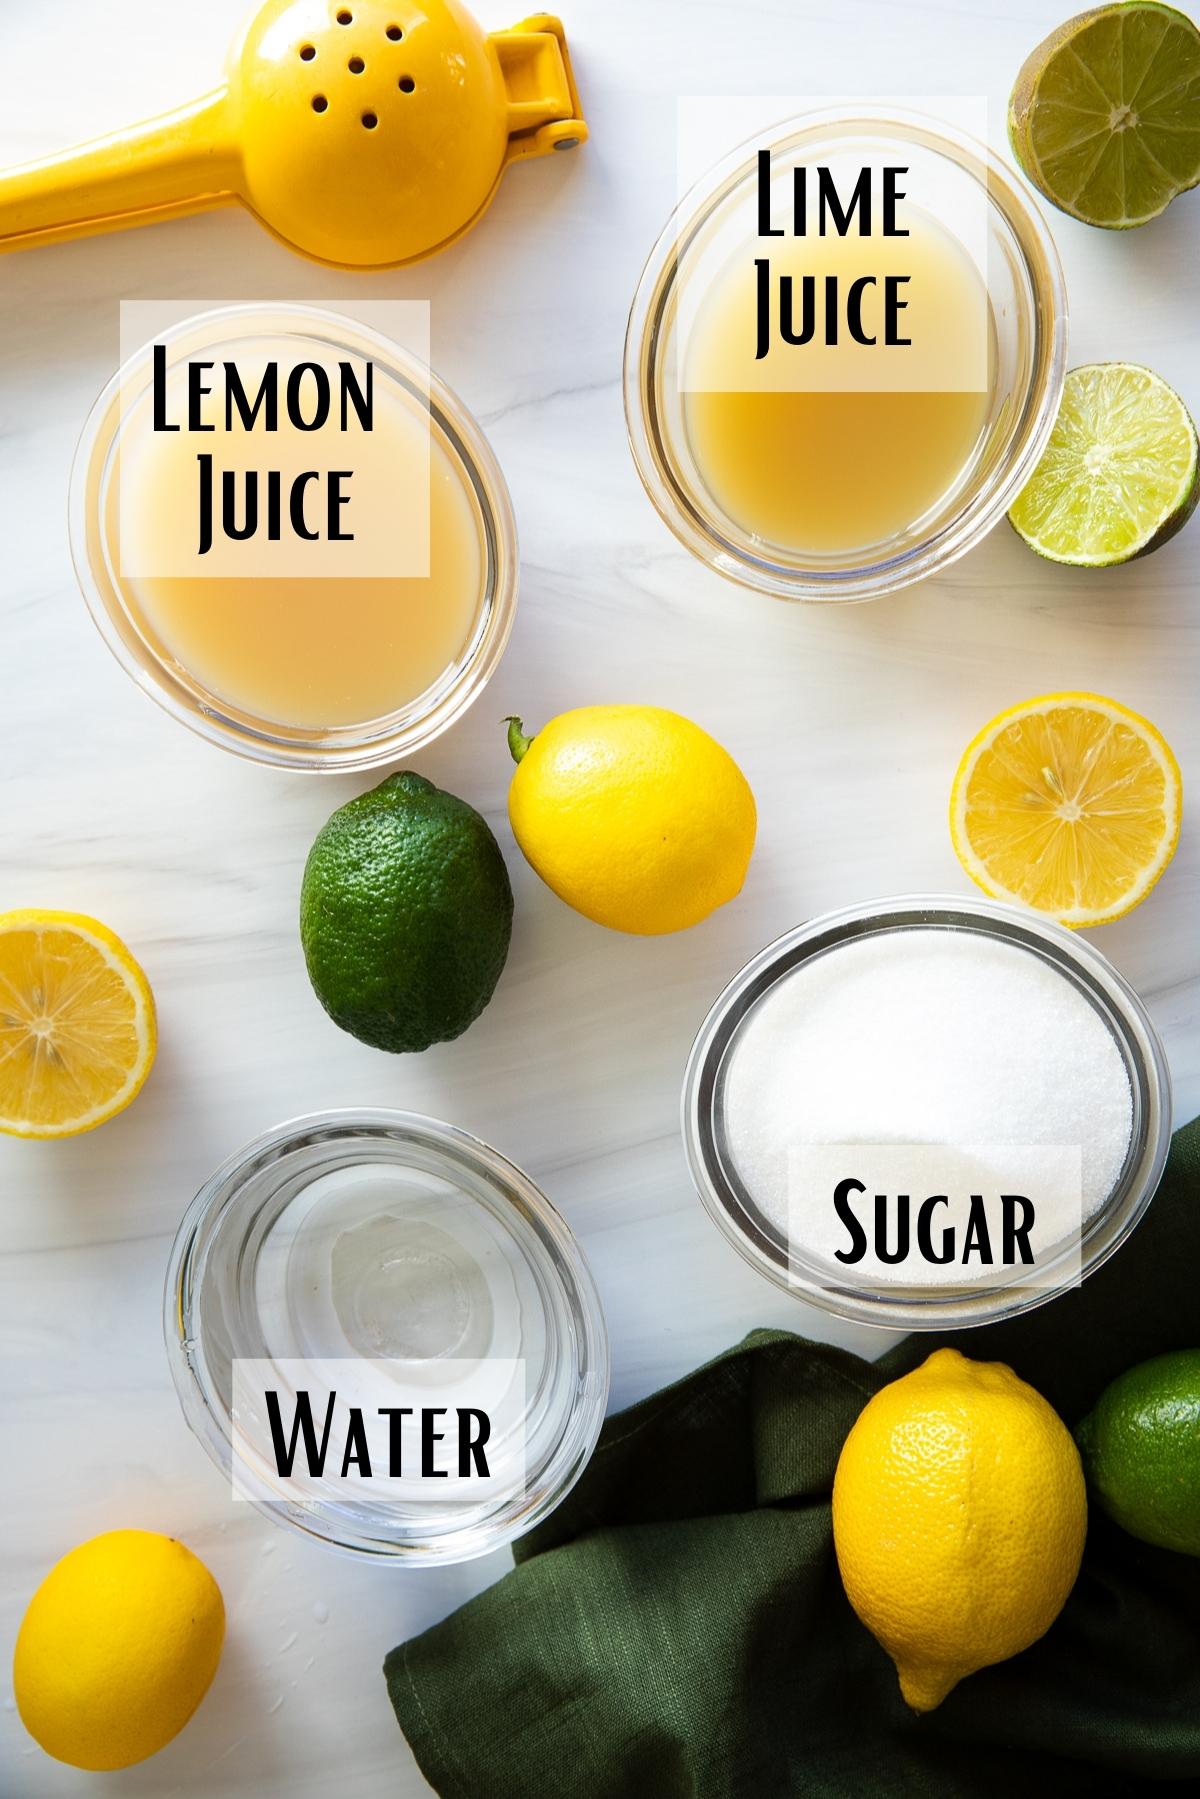 sour mix ingredients of lemon juice, lime juice, water, and sugar.